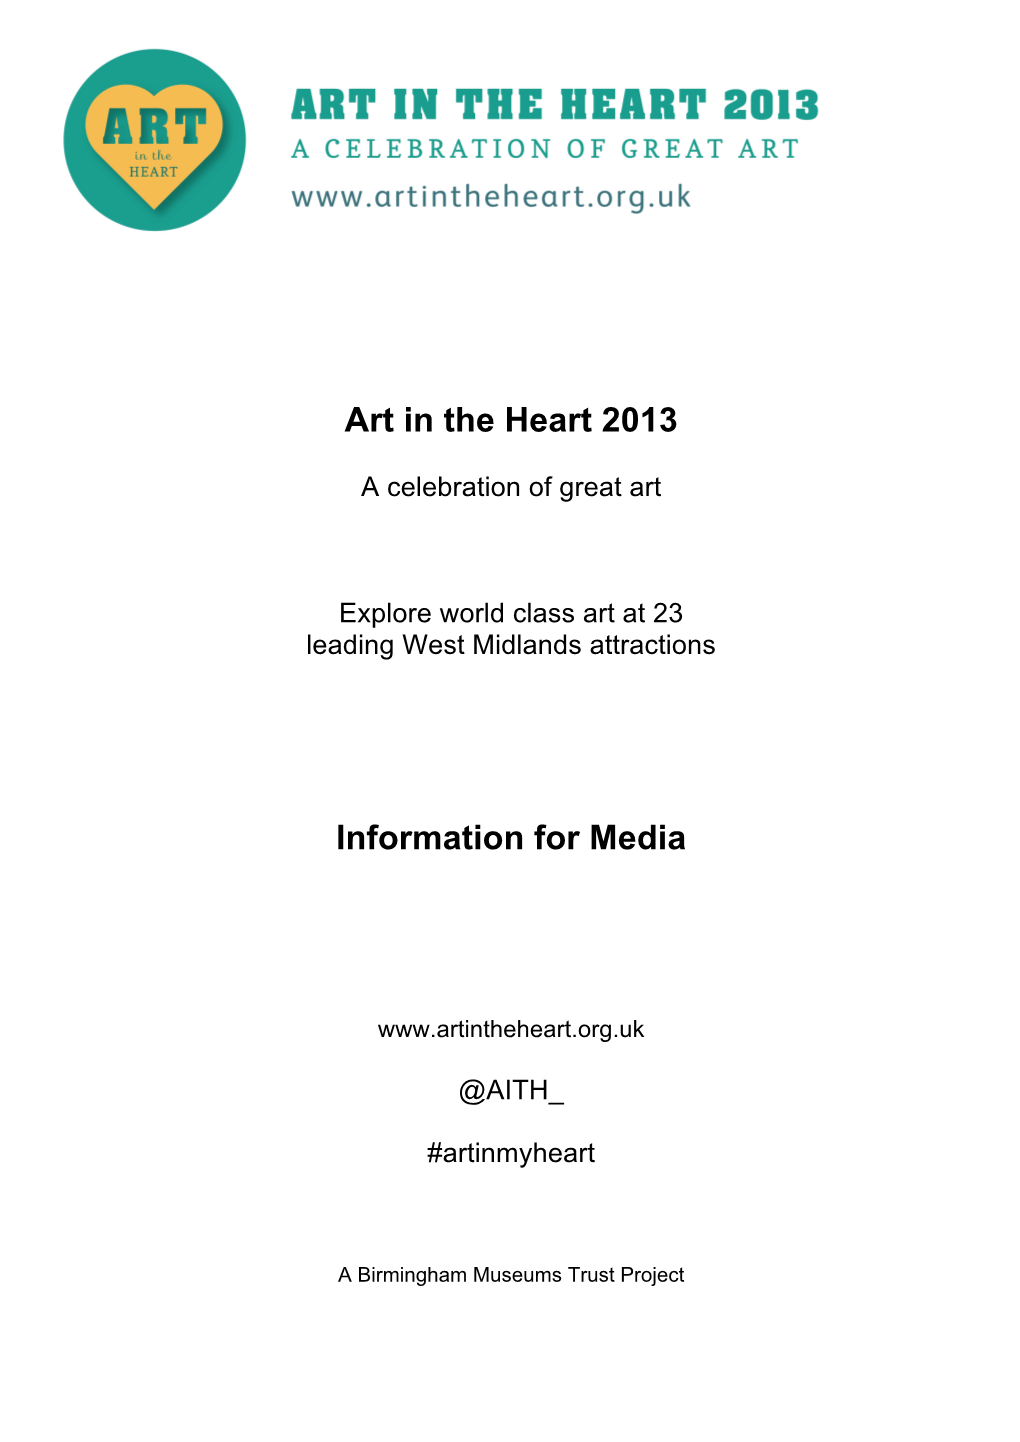 Art in the Heart 2013 Information for Media